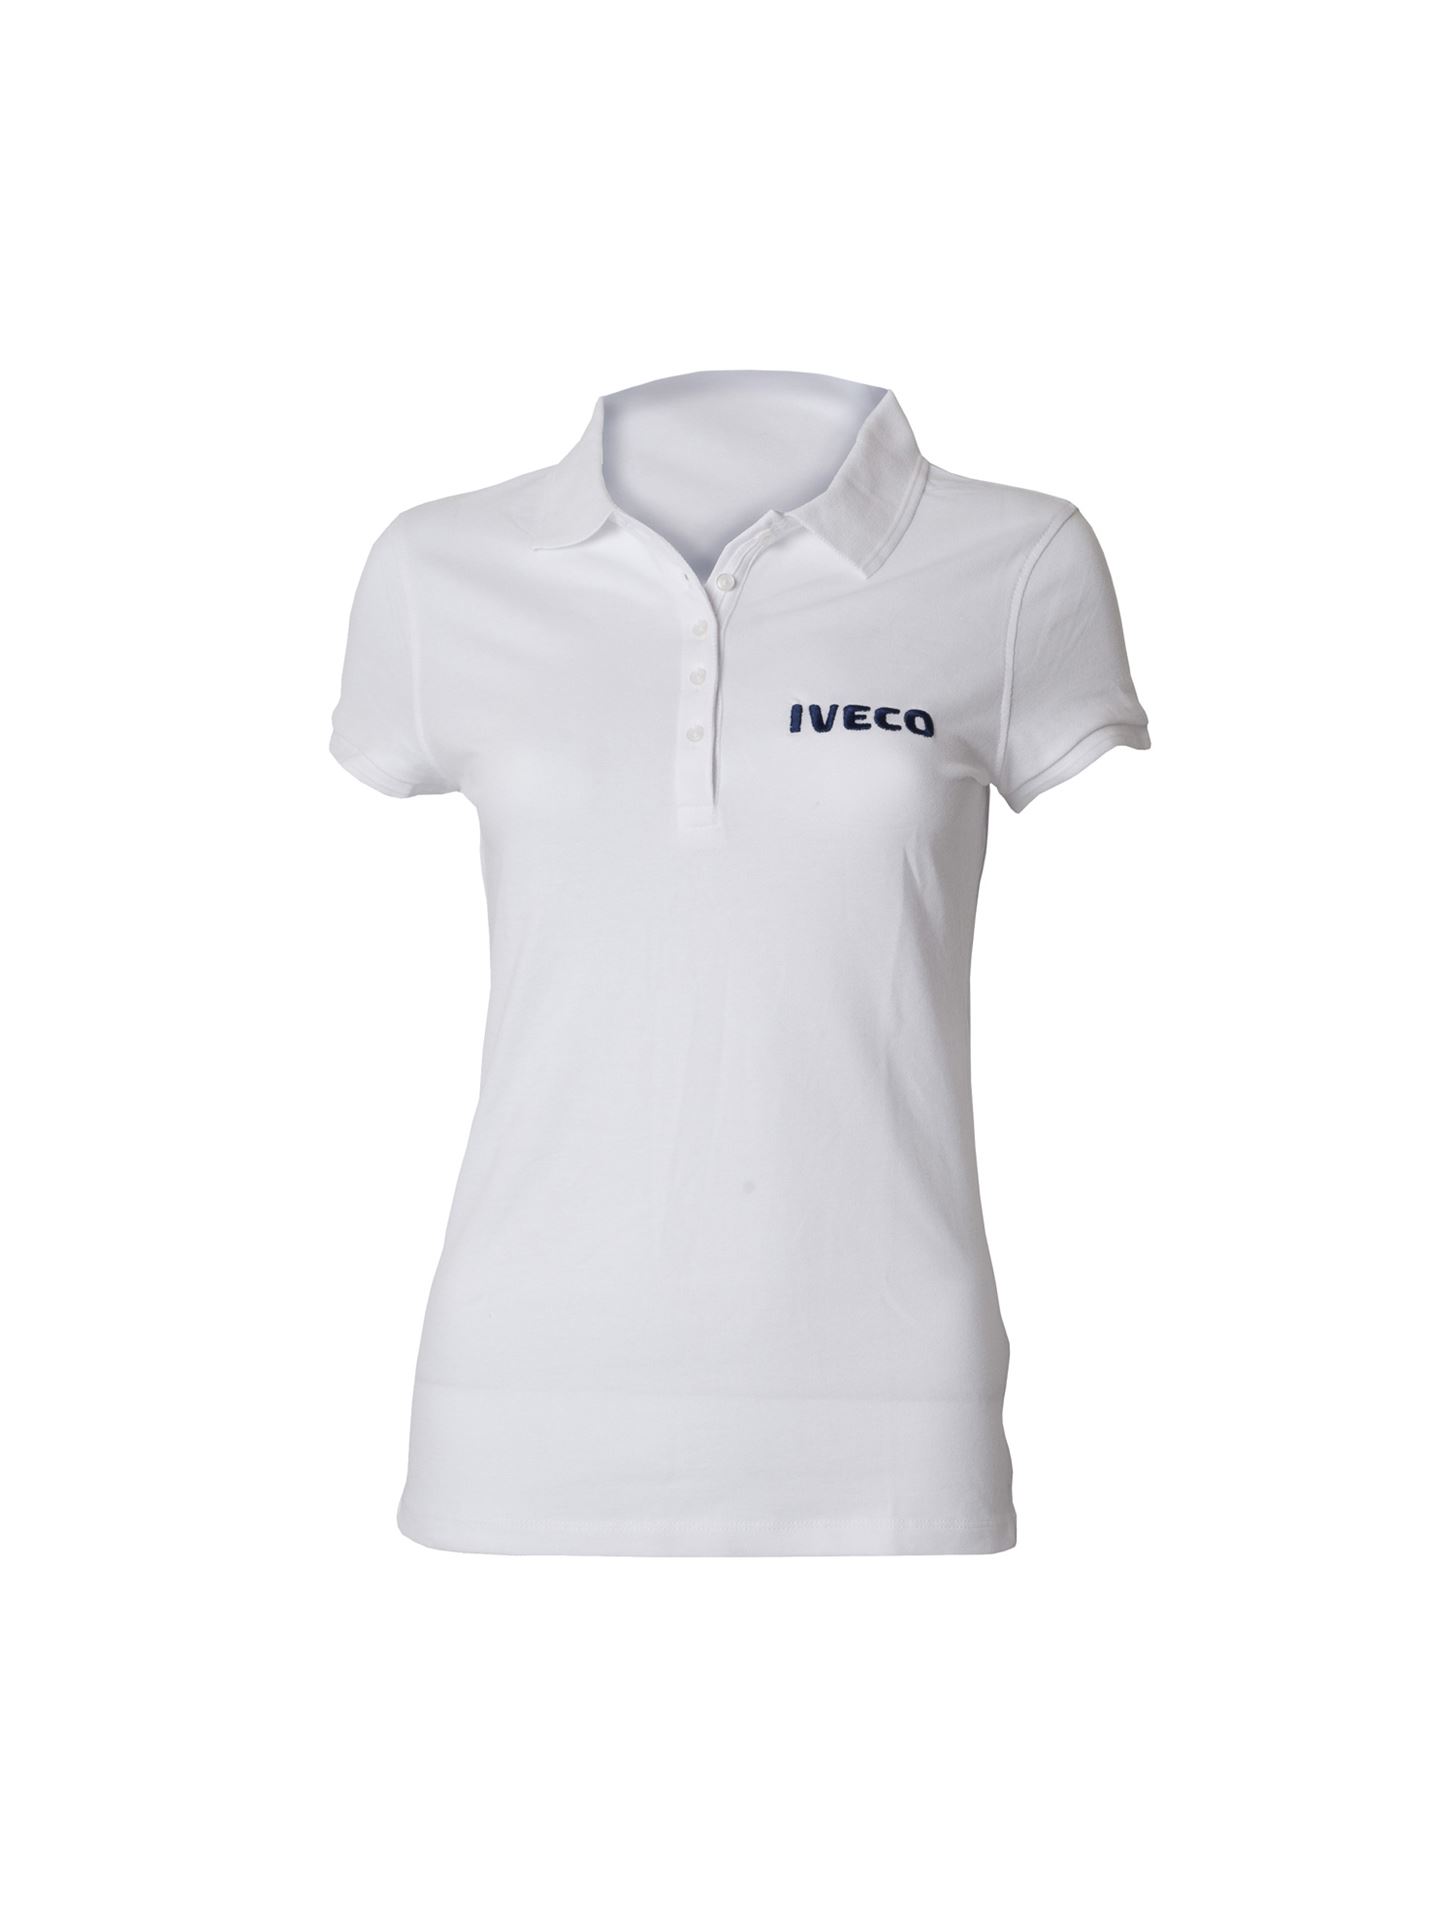 Iveco Fanshop. Women's polo shirt, white